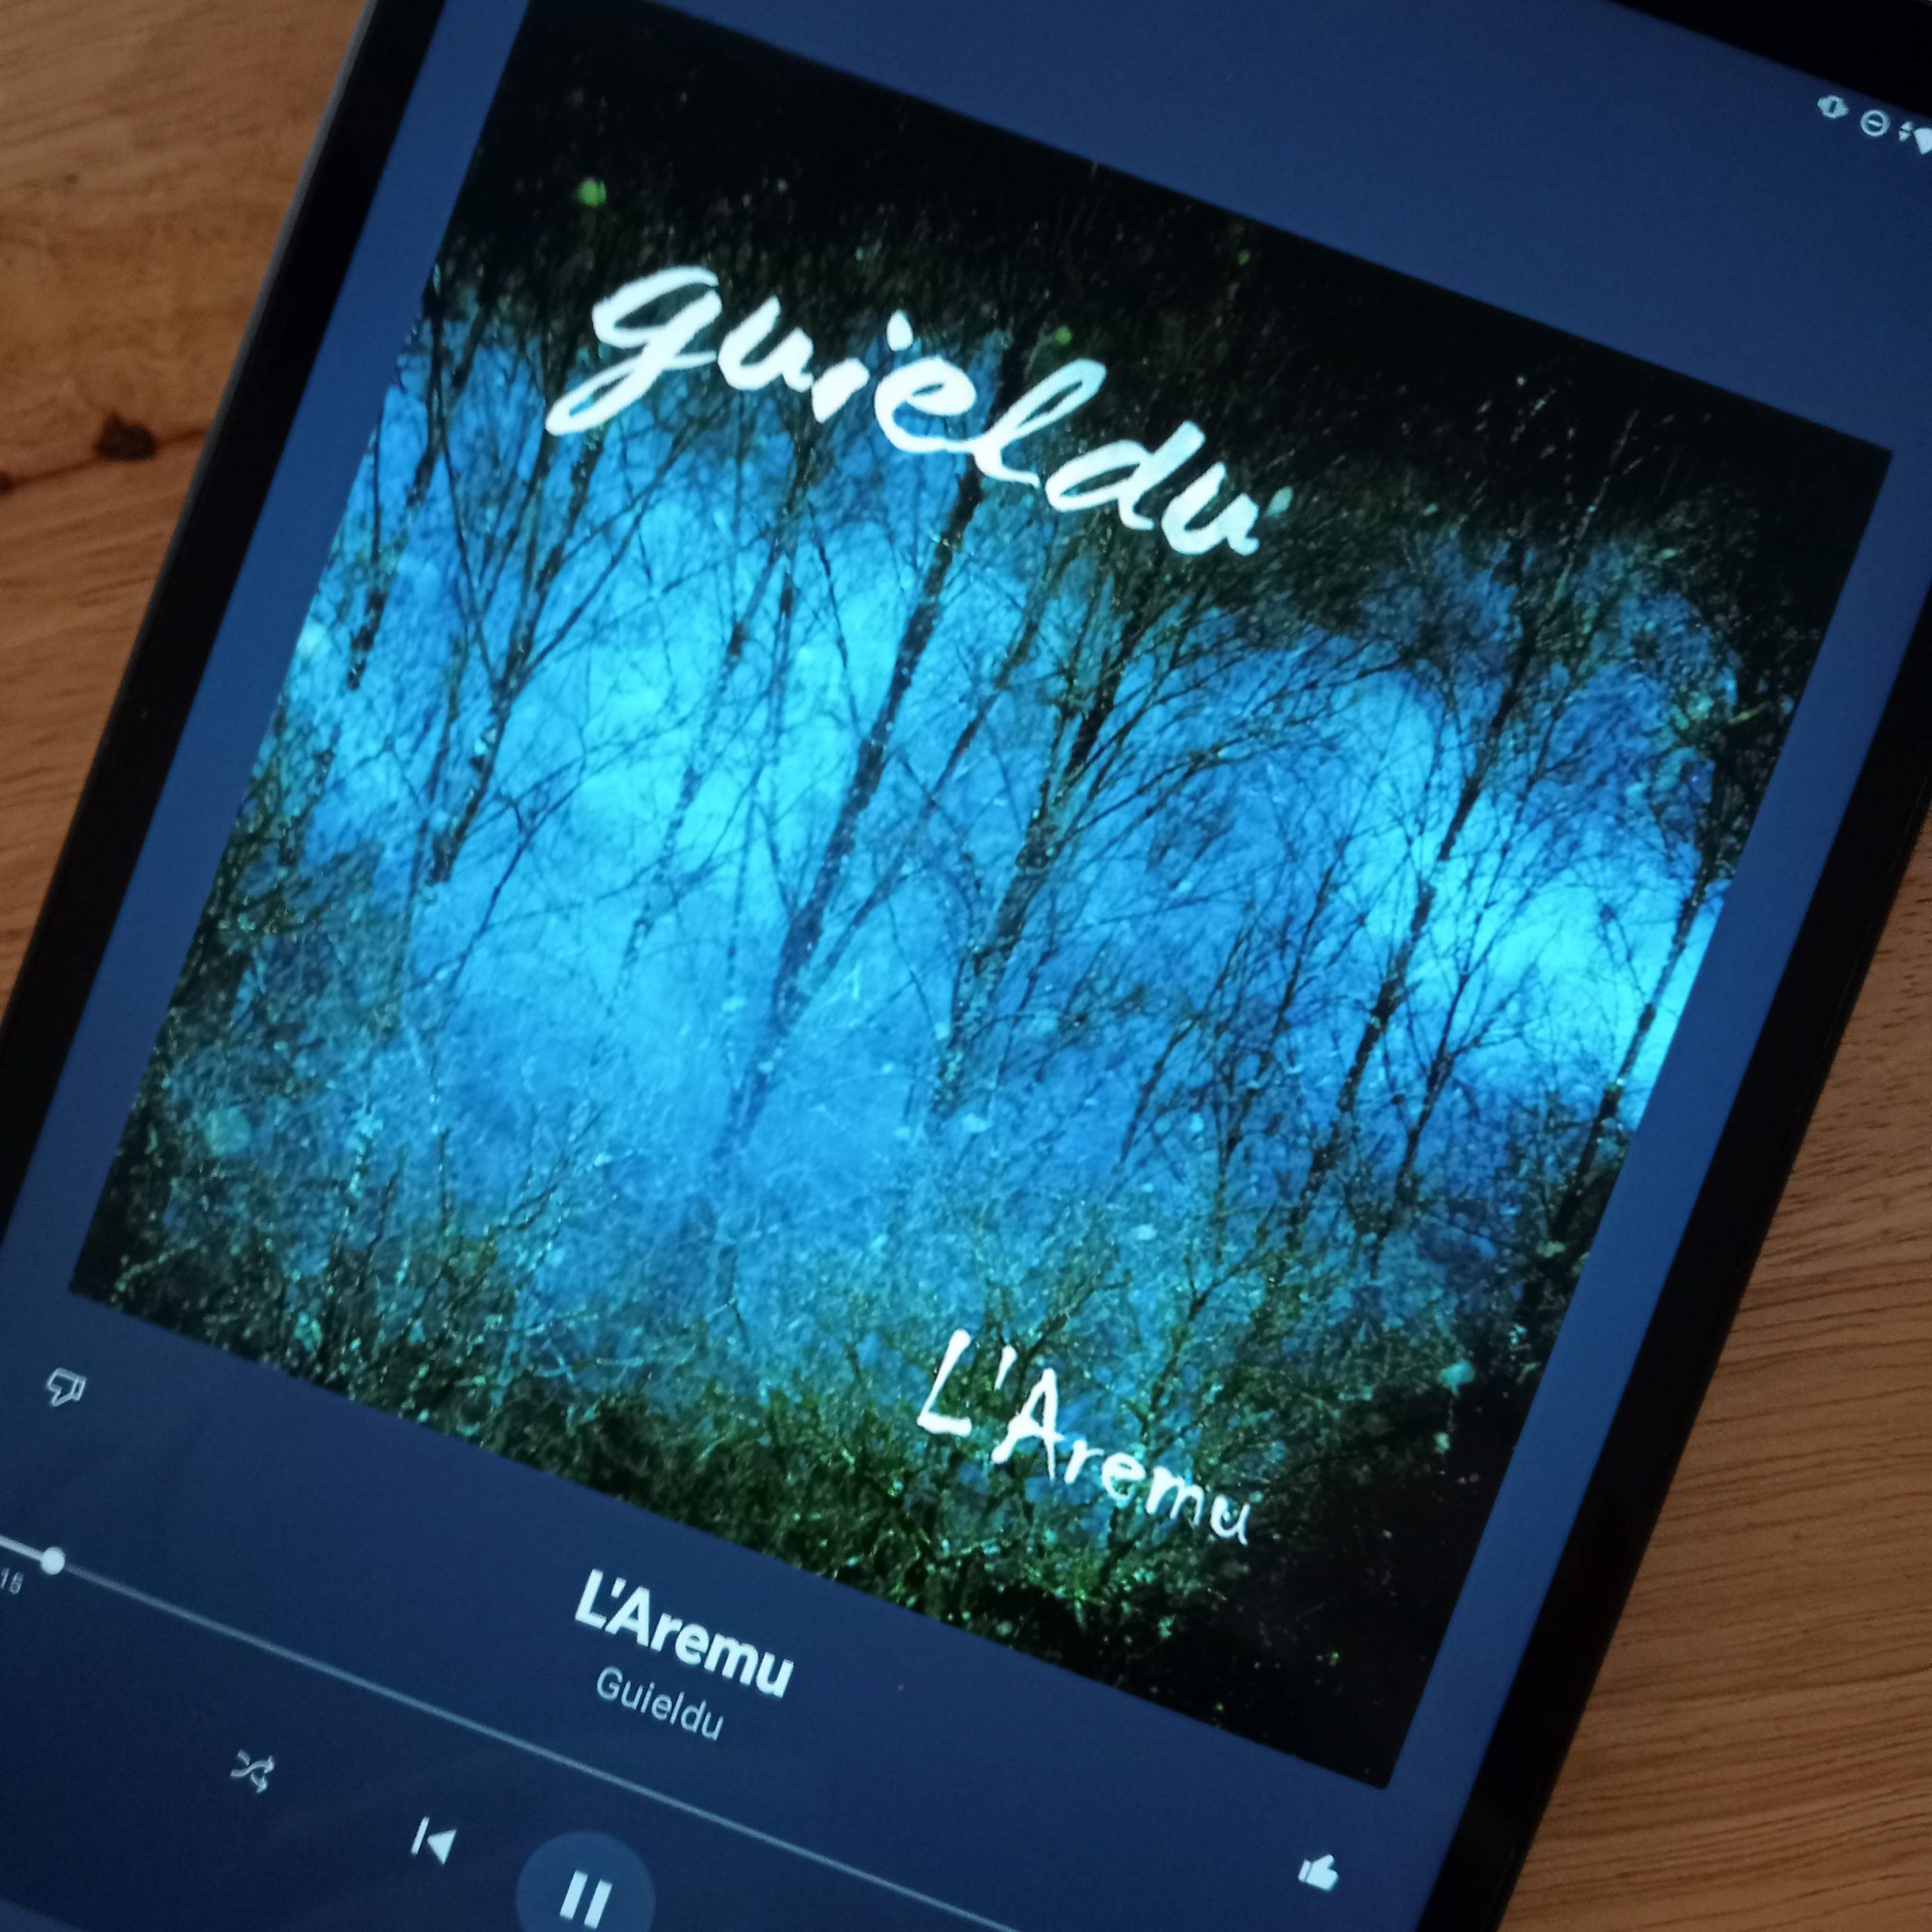 Música de Guieldu en dispositivo móvil